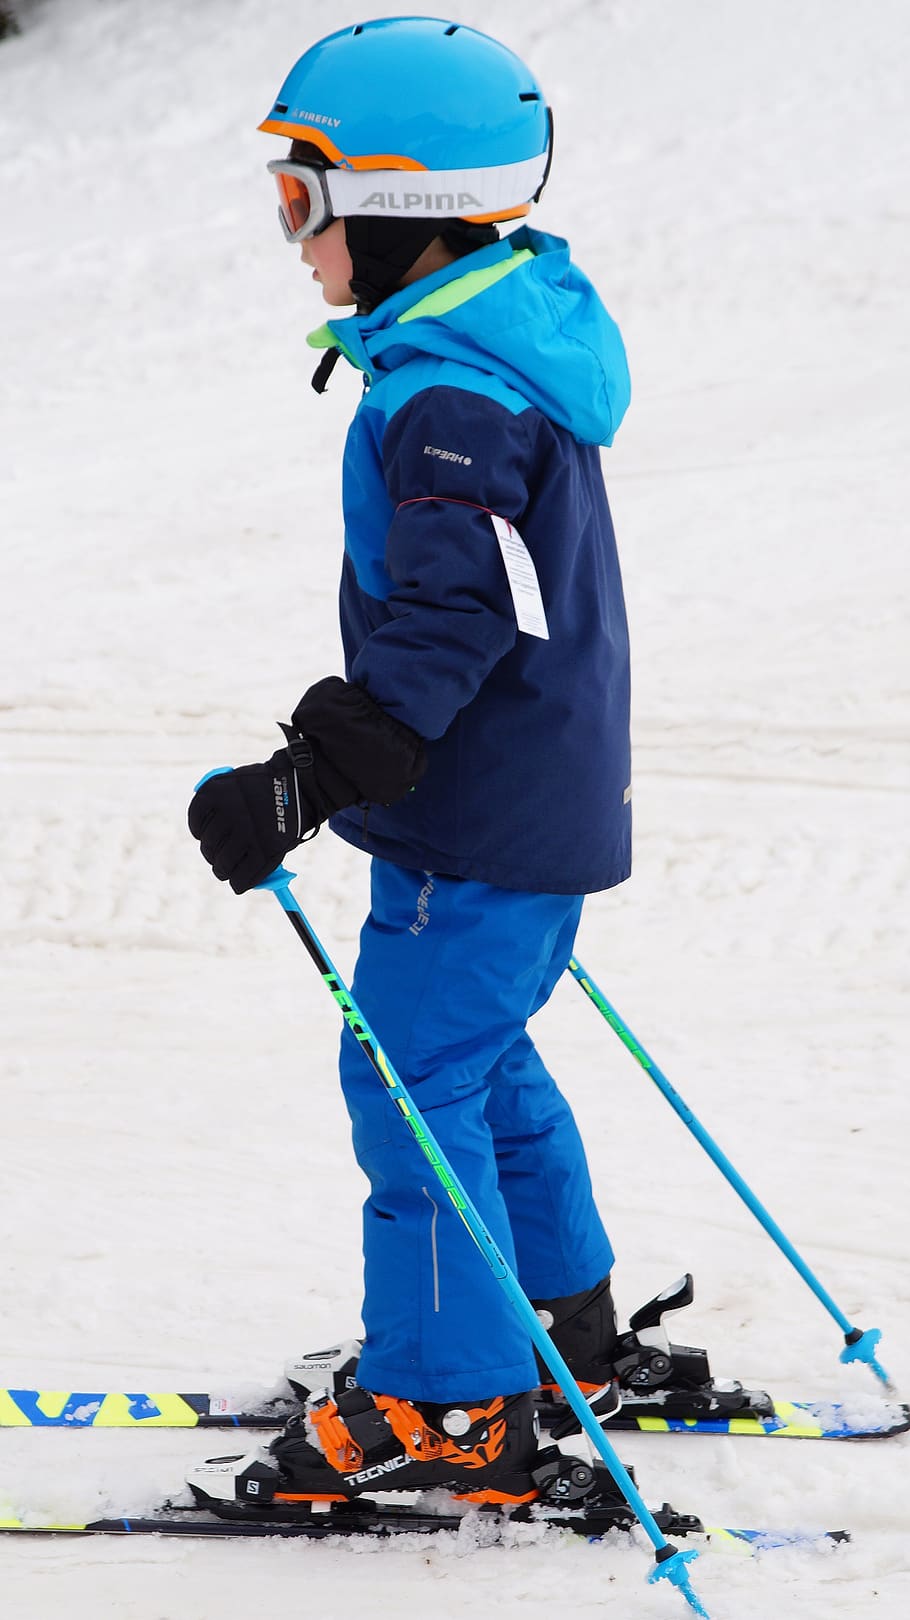 skiing, children skiing, snow, ski, child, winter sports, skiers, winter, cold, sport